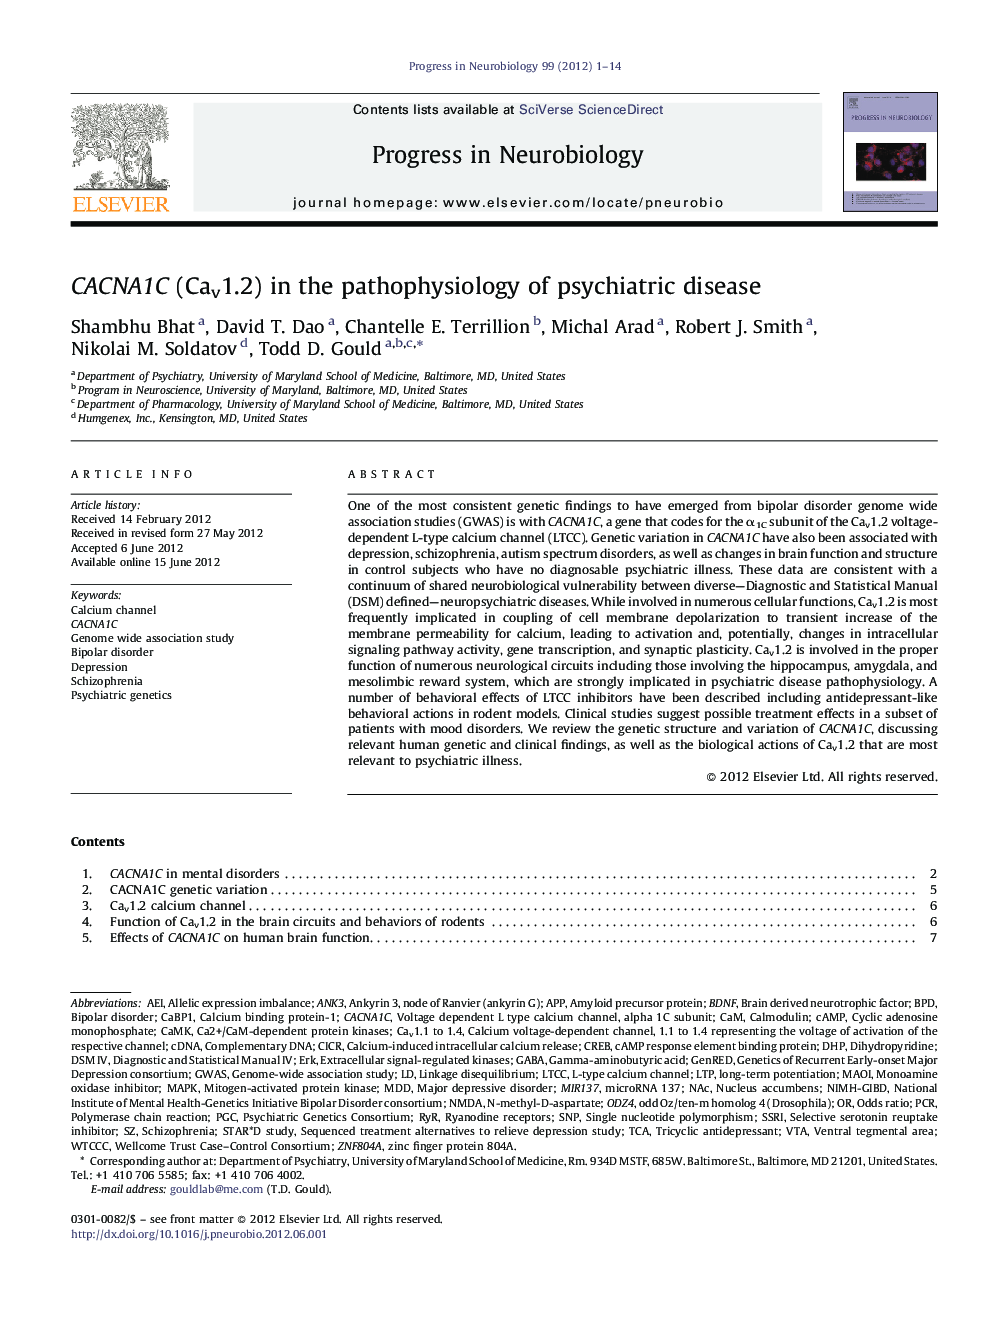 CACNA1C (Cav1.2) in the pathophysiology of psychiatric disease